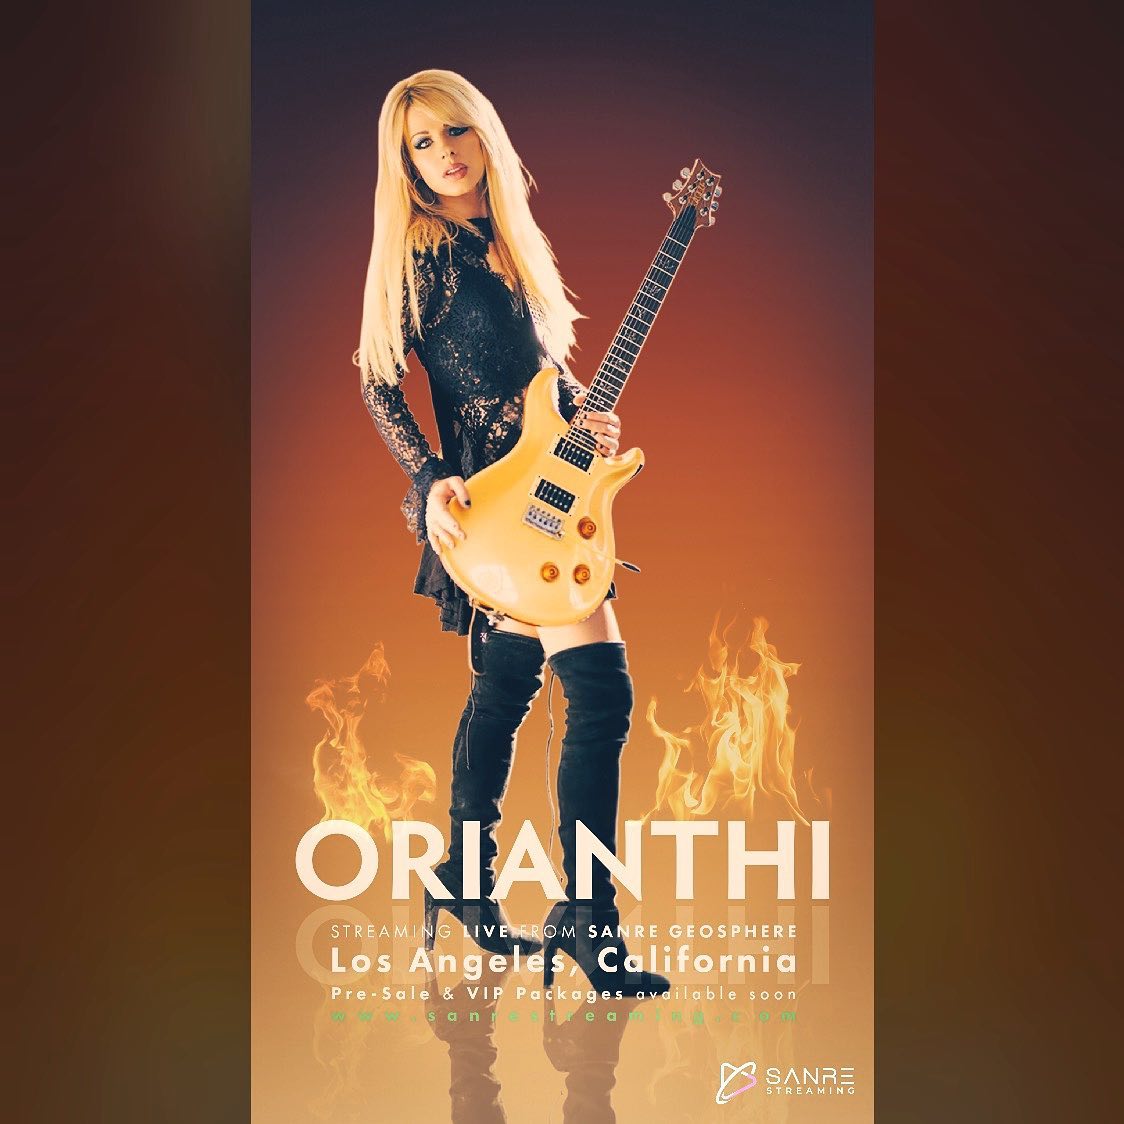 Get your tickets for @orianthi's livestream on June 19, 2021 at 1:00 am (EST) - 10:00pm (PDT)  at 

livestreamSanrestreaming.com  

#newtunes #geosphere #losangeles #Orianthi #OrianthiPanagaris